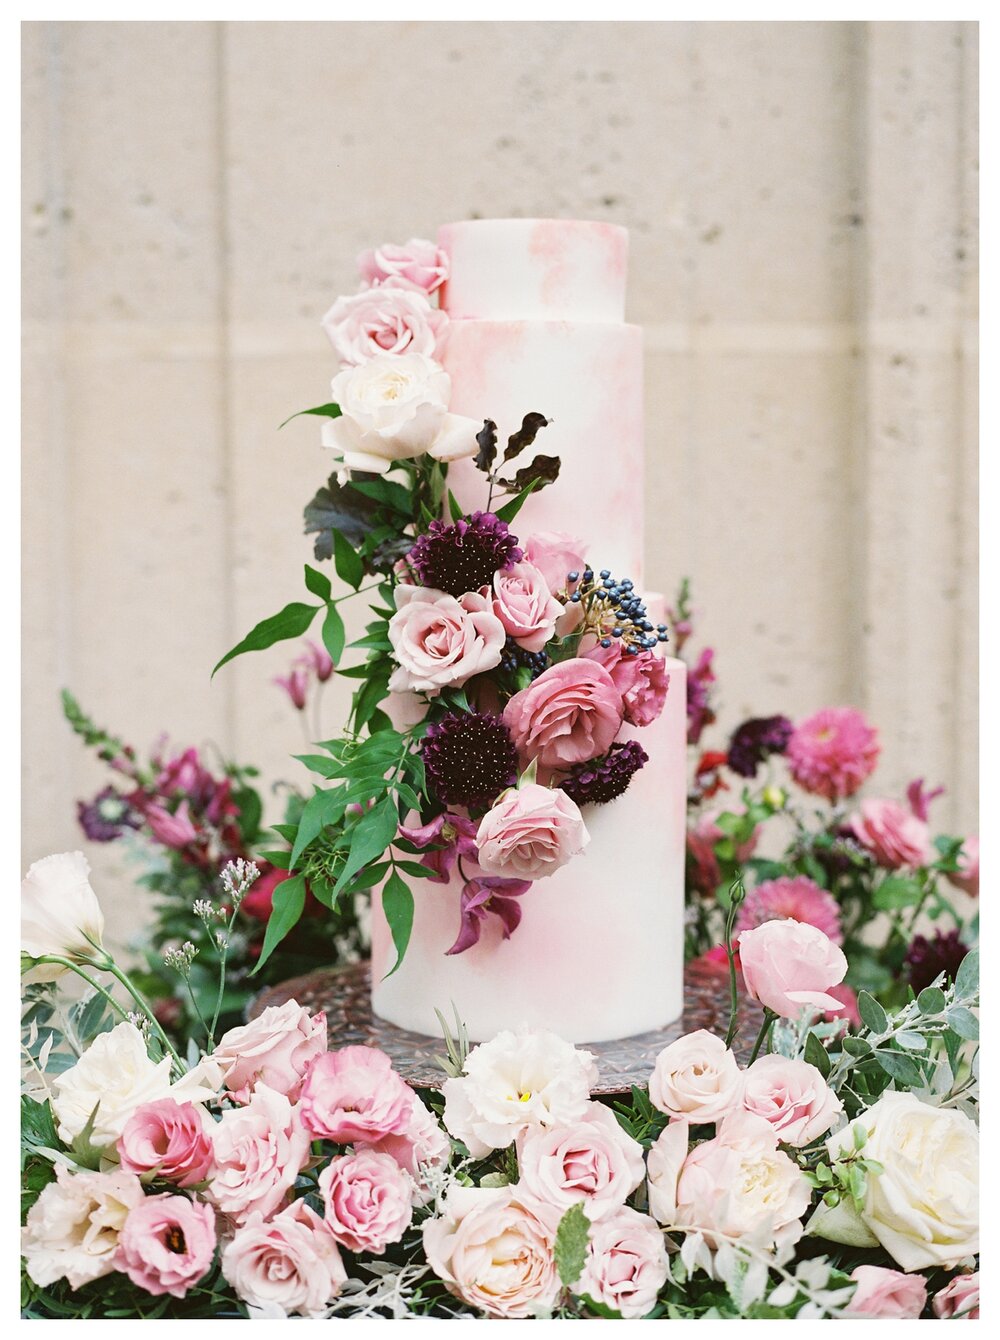  wedding cake ideas, wedding cake decor, pink wedding cake, flowers wedding cake 